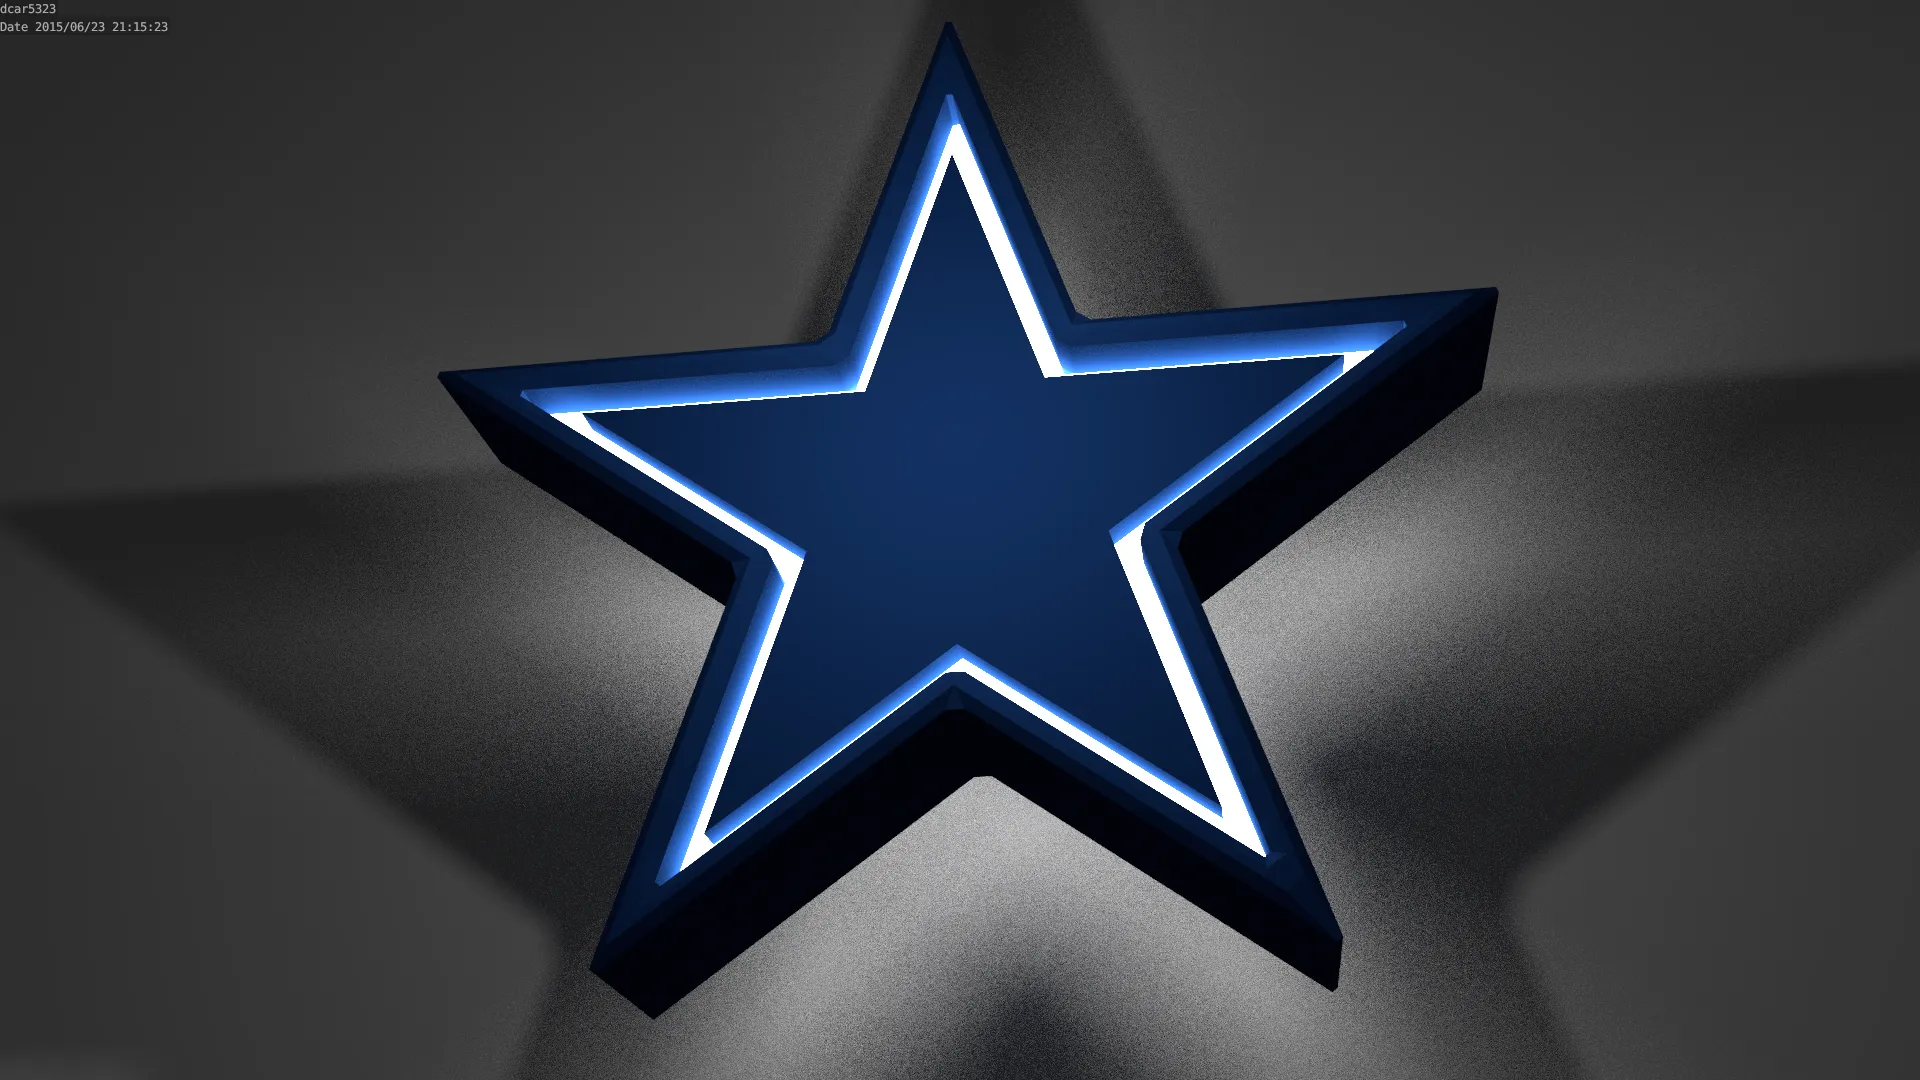 Essential Statistics for Dallas Cowboys as Season Progresses